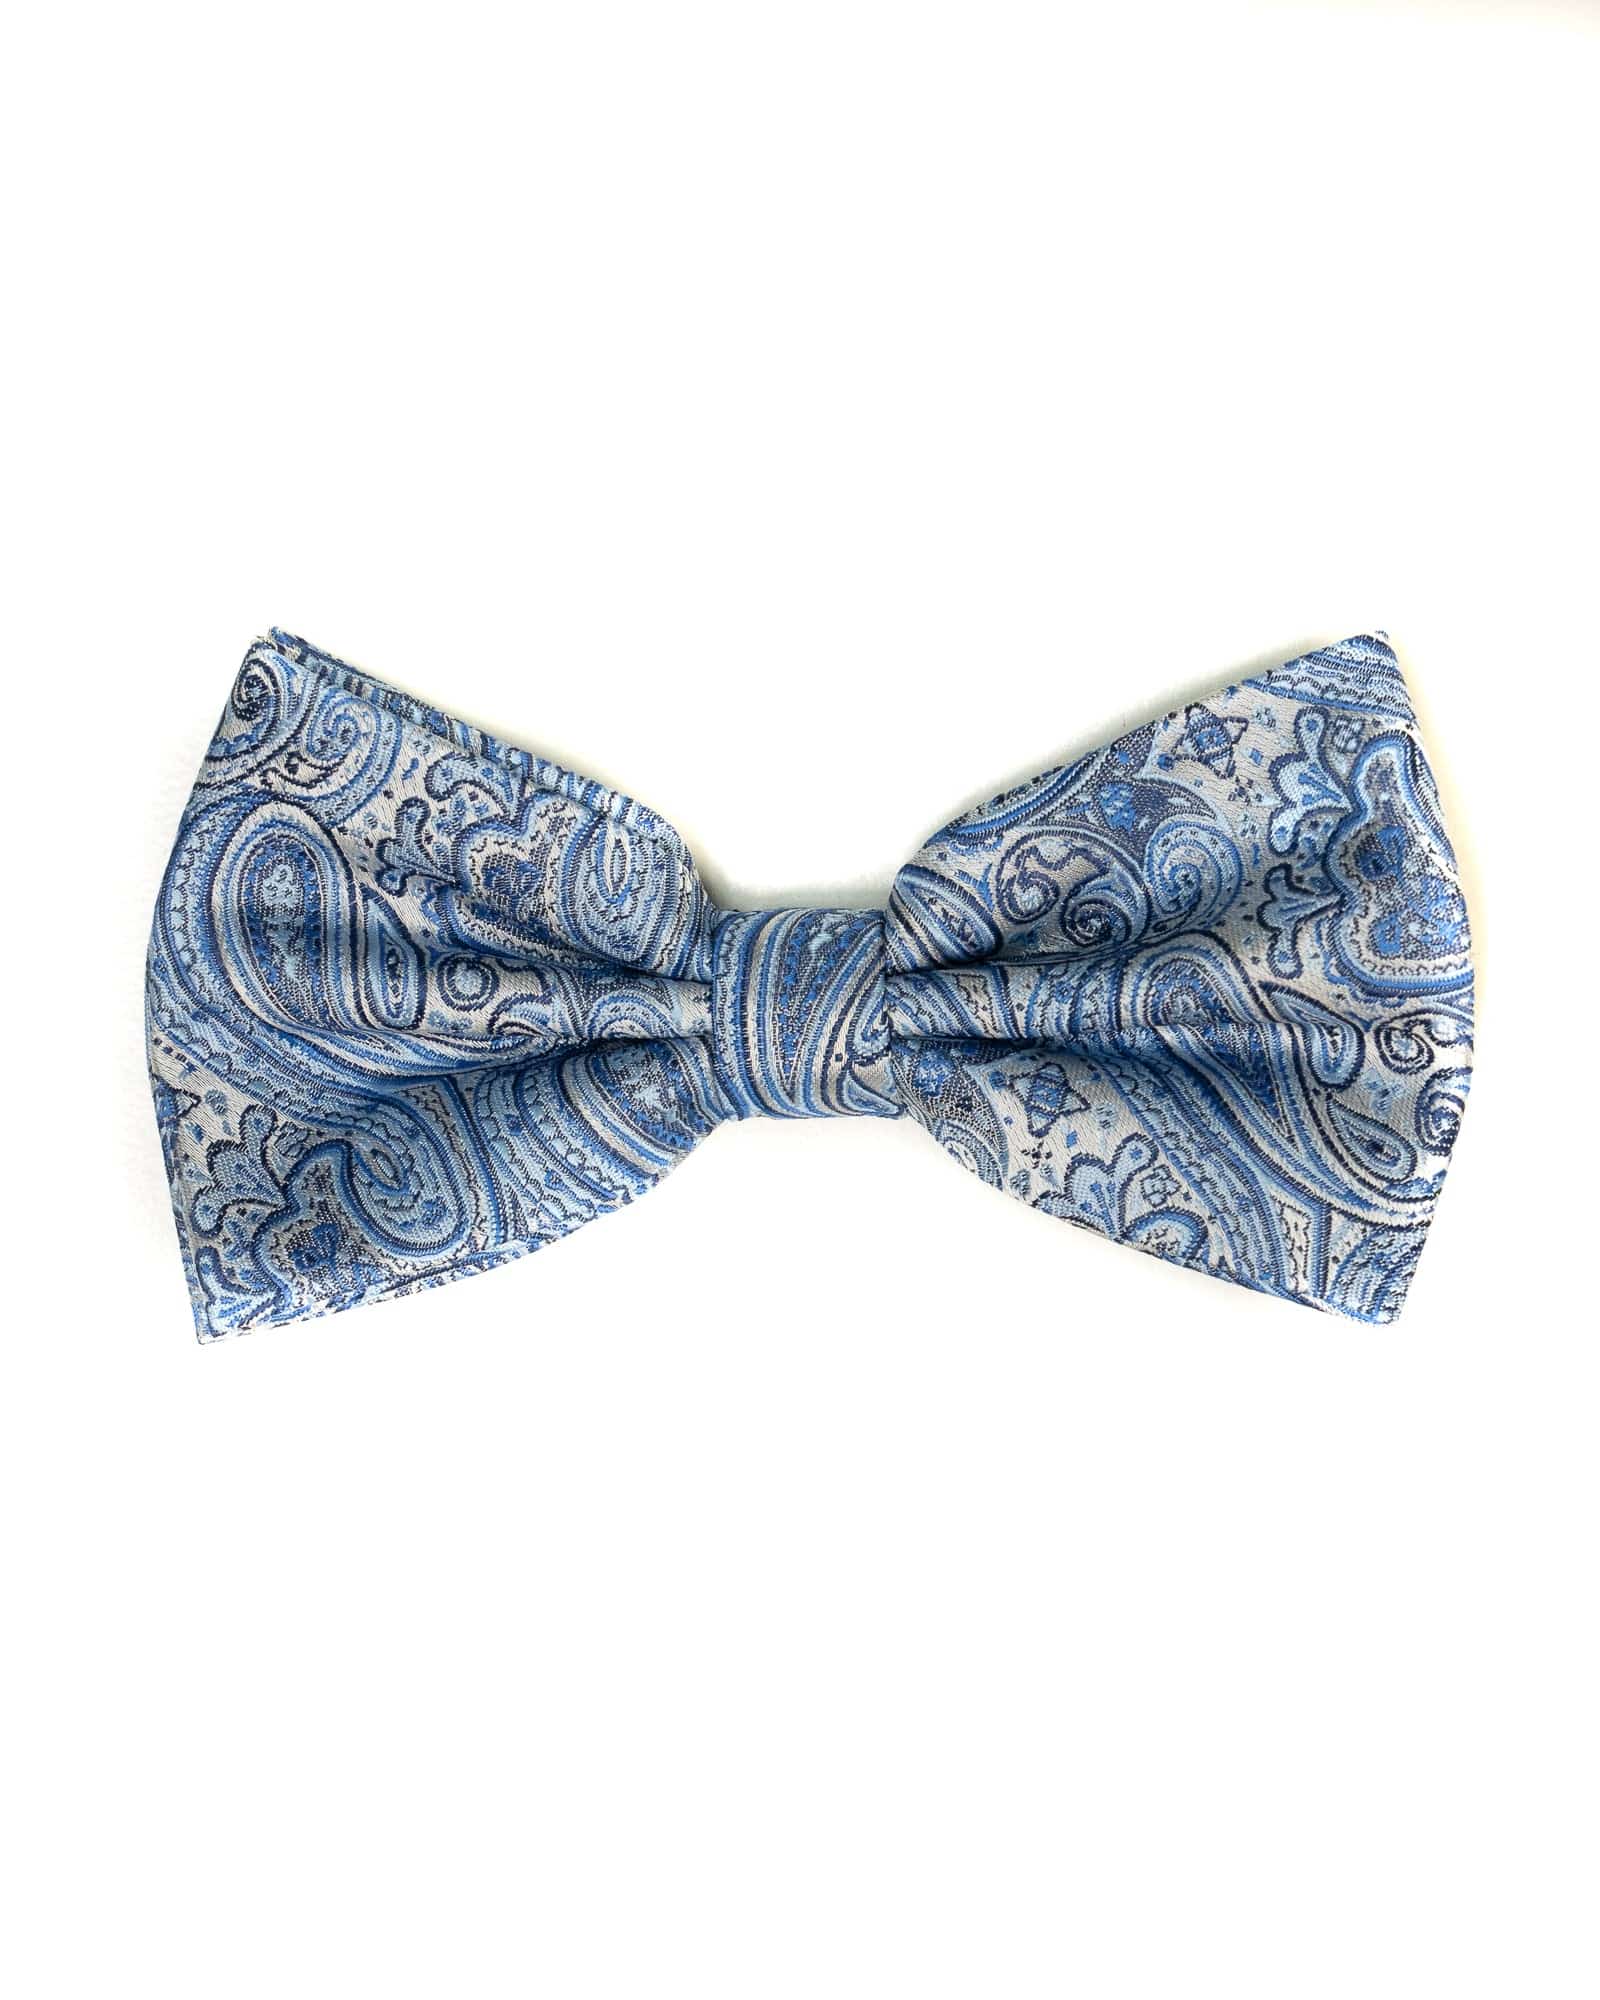 Bow Tie Paisley In Light Blue & Navy - Rainwater's Men's Clothing and Tuxedo Rental